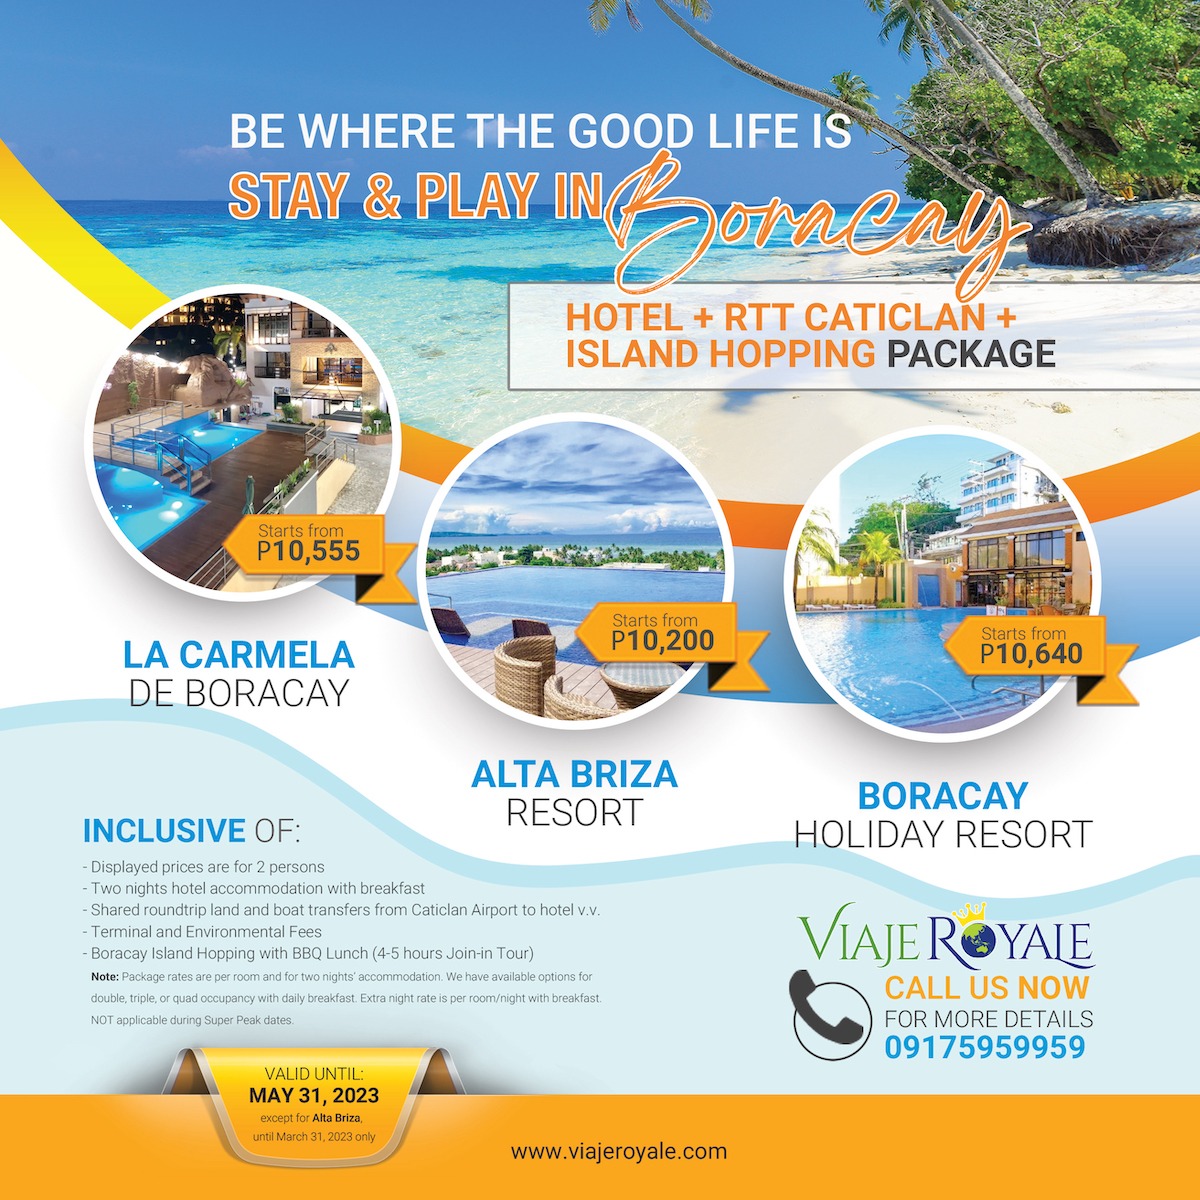 Stay & Play in Boracay